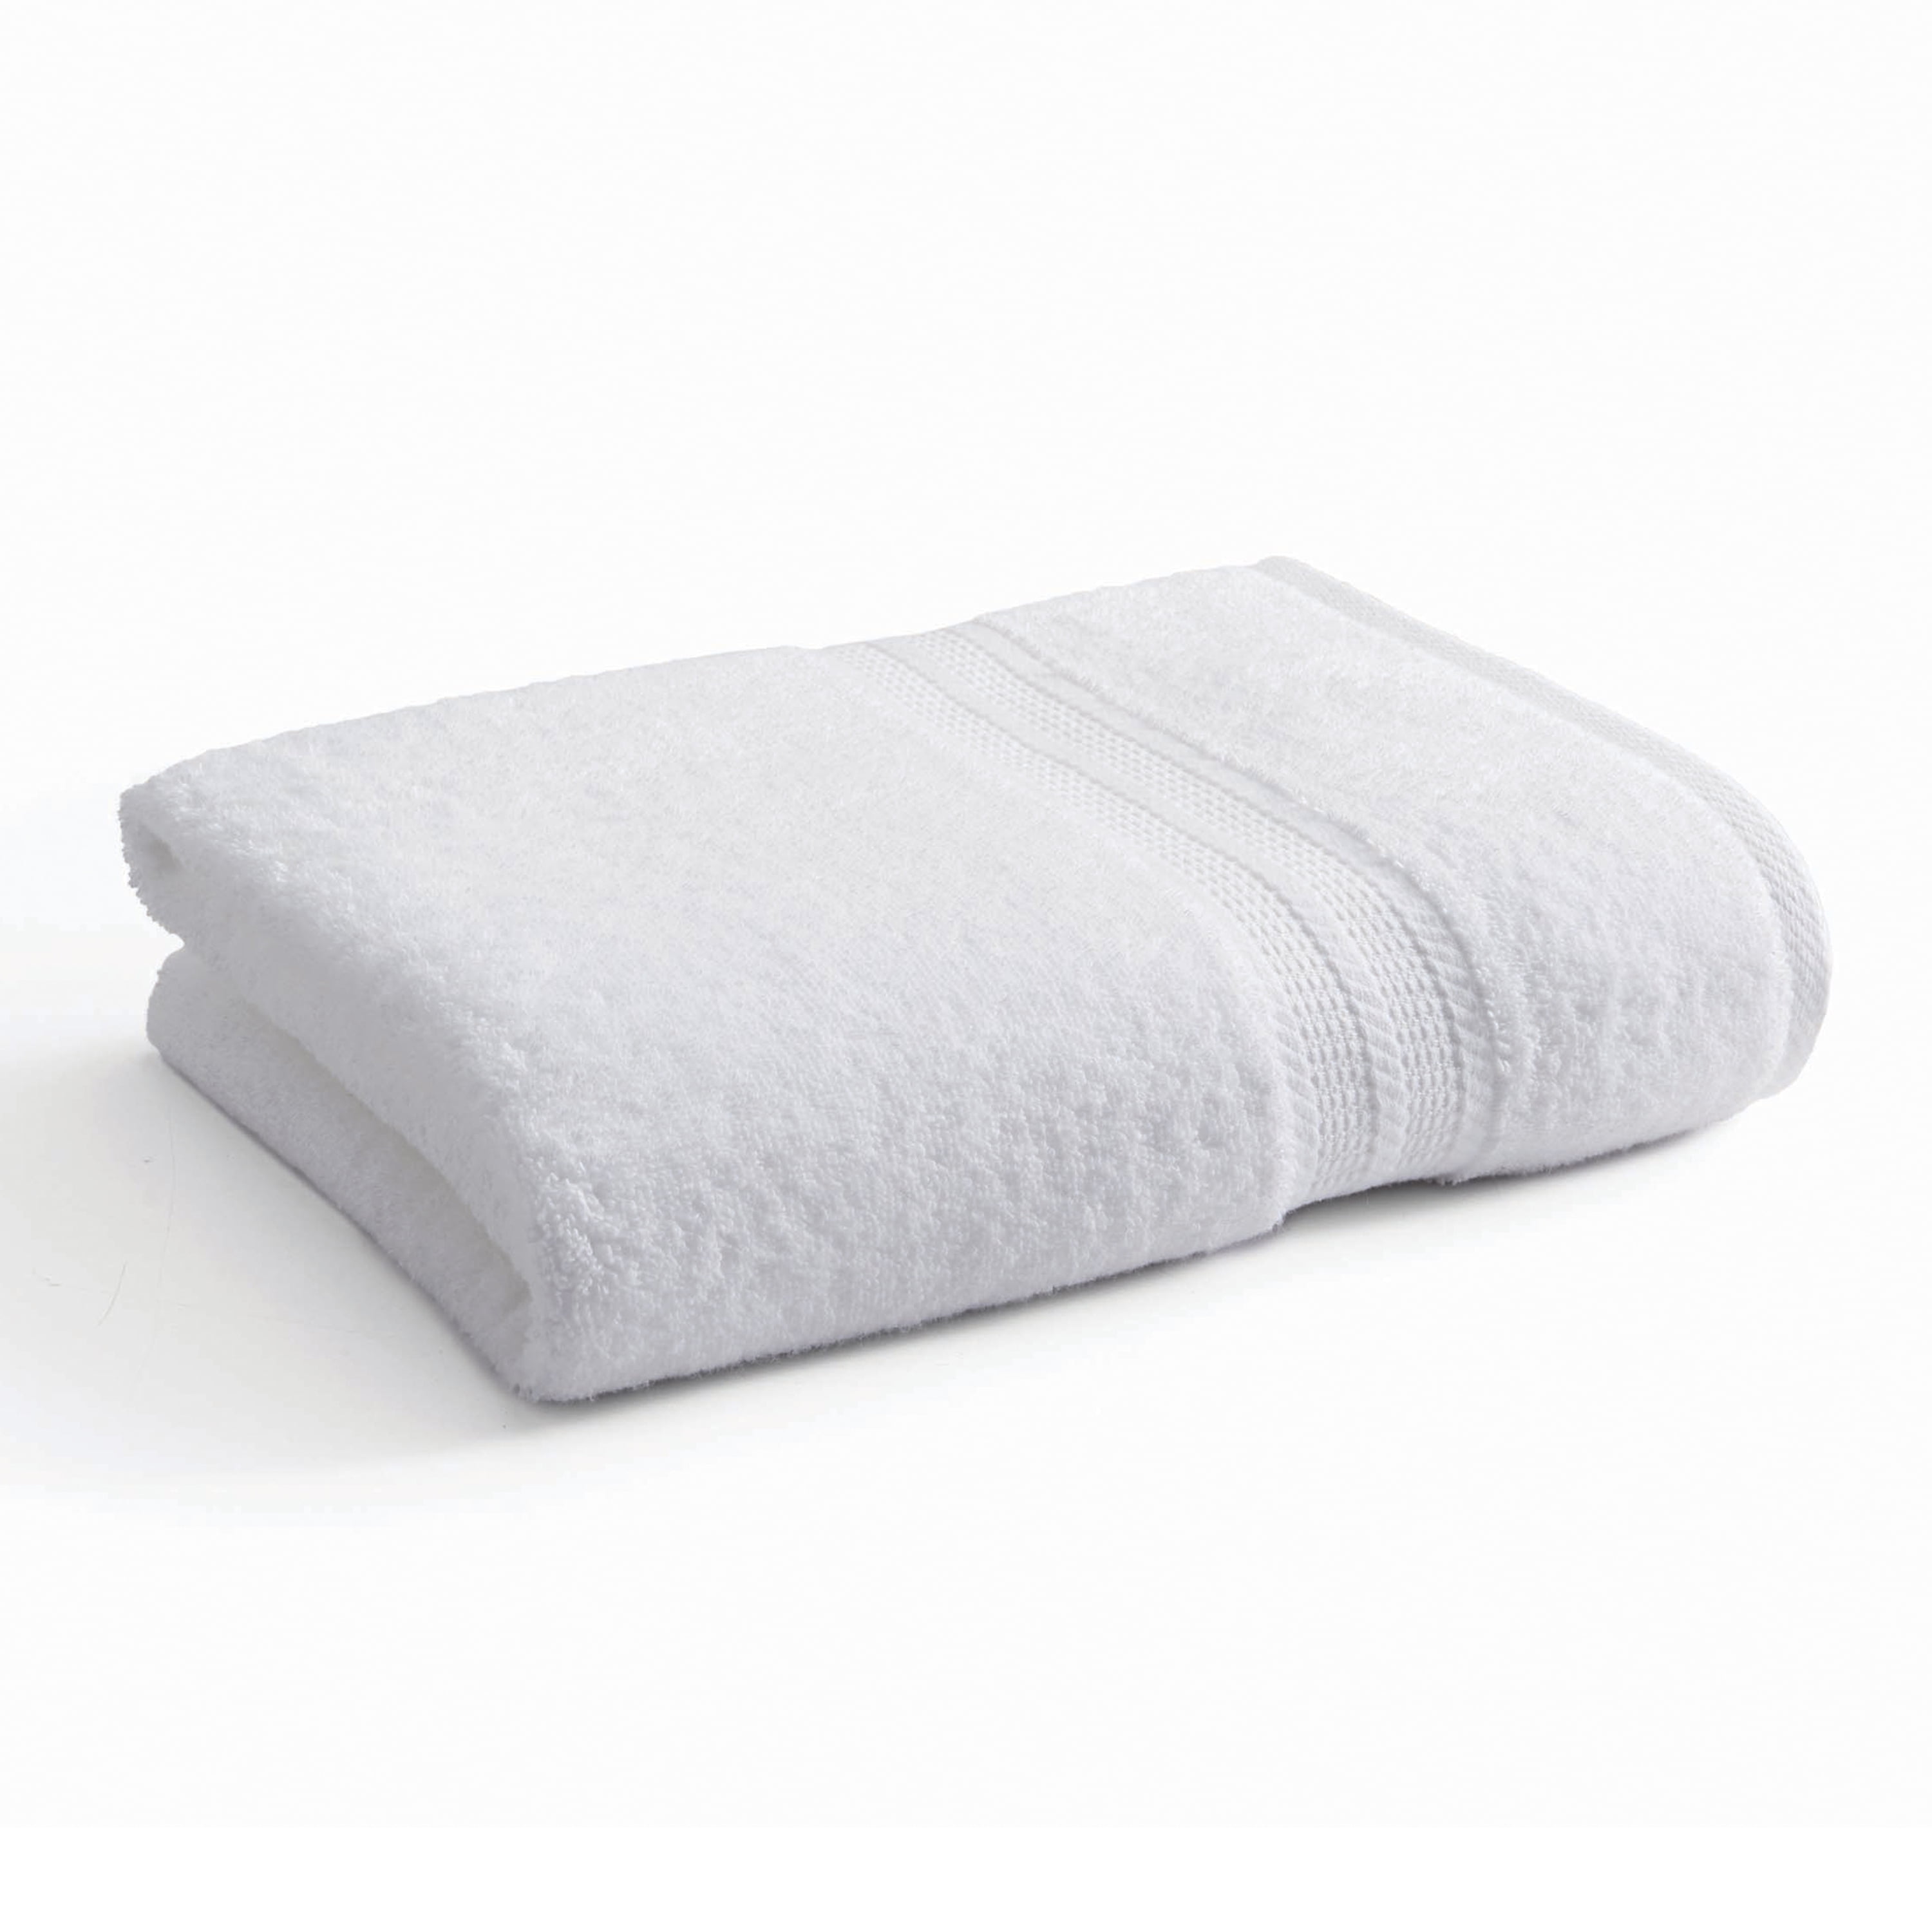 Under The Canopy Classic Organic Towel - White White / 6-Piece Bath Sheet Set